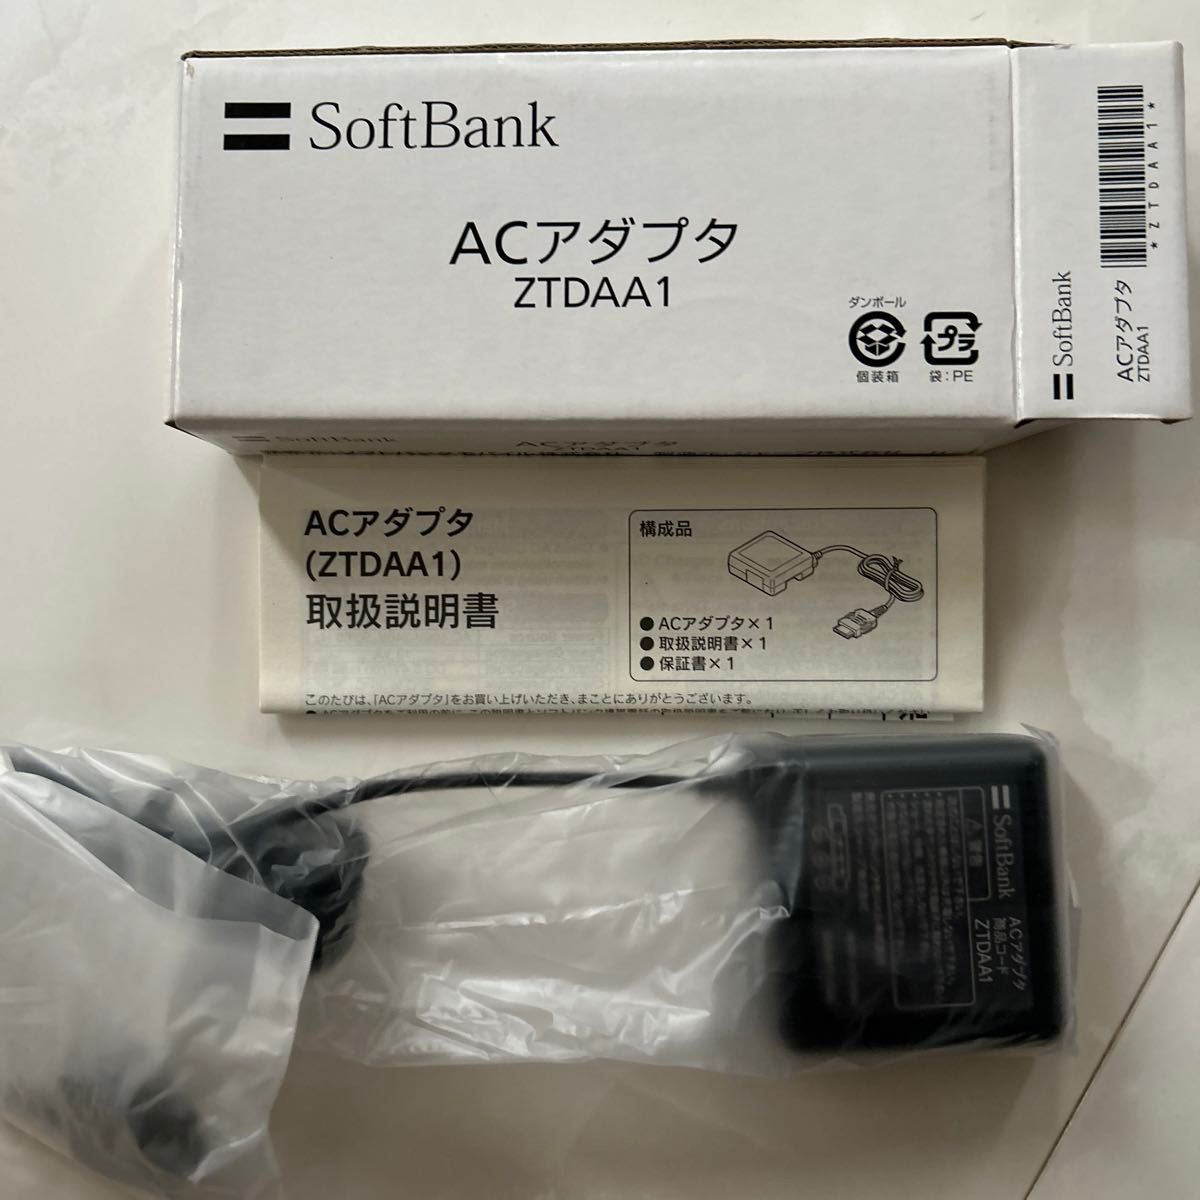 SoftBank純正 ACアダプタ ZTDAA1 ソフトバンク ガラケー 充電器 ACアダプタ 充電器 SoftBank  充電器